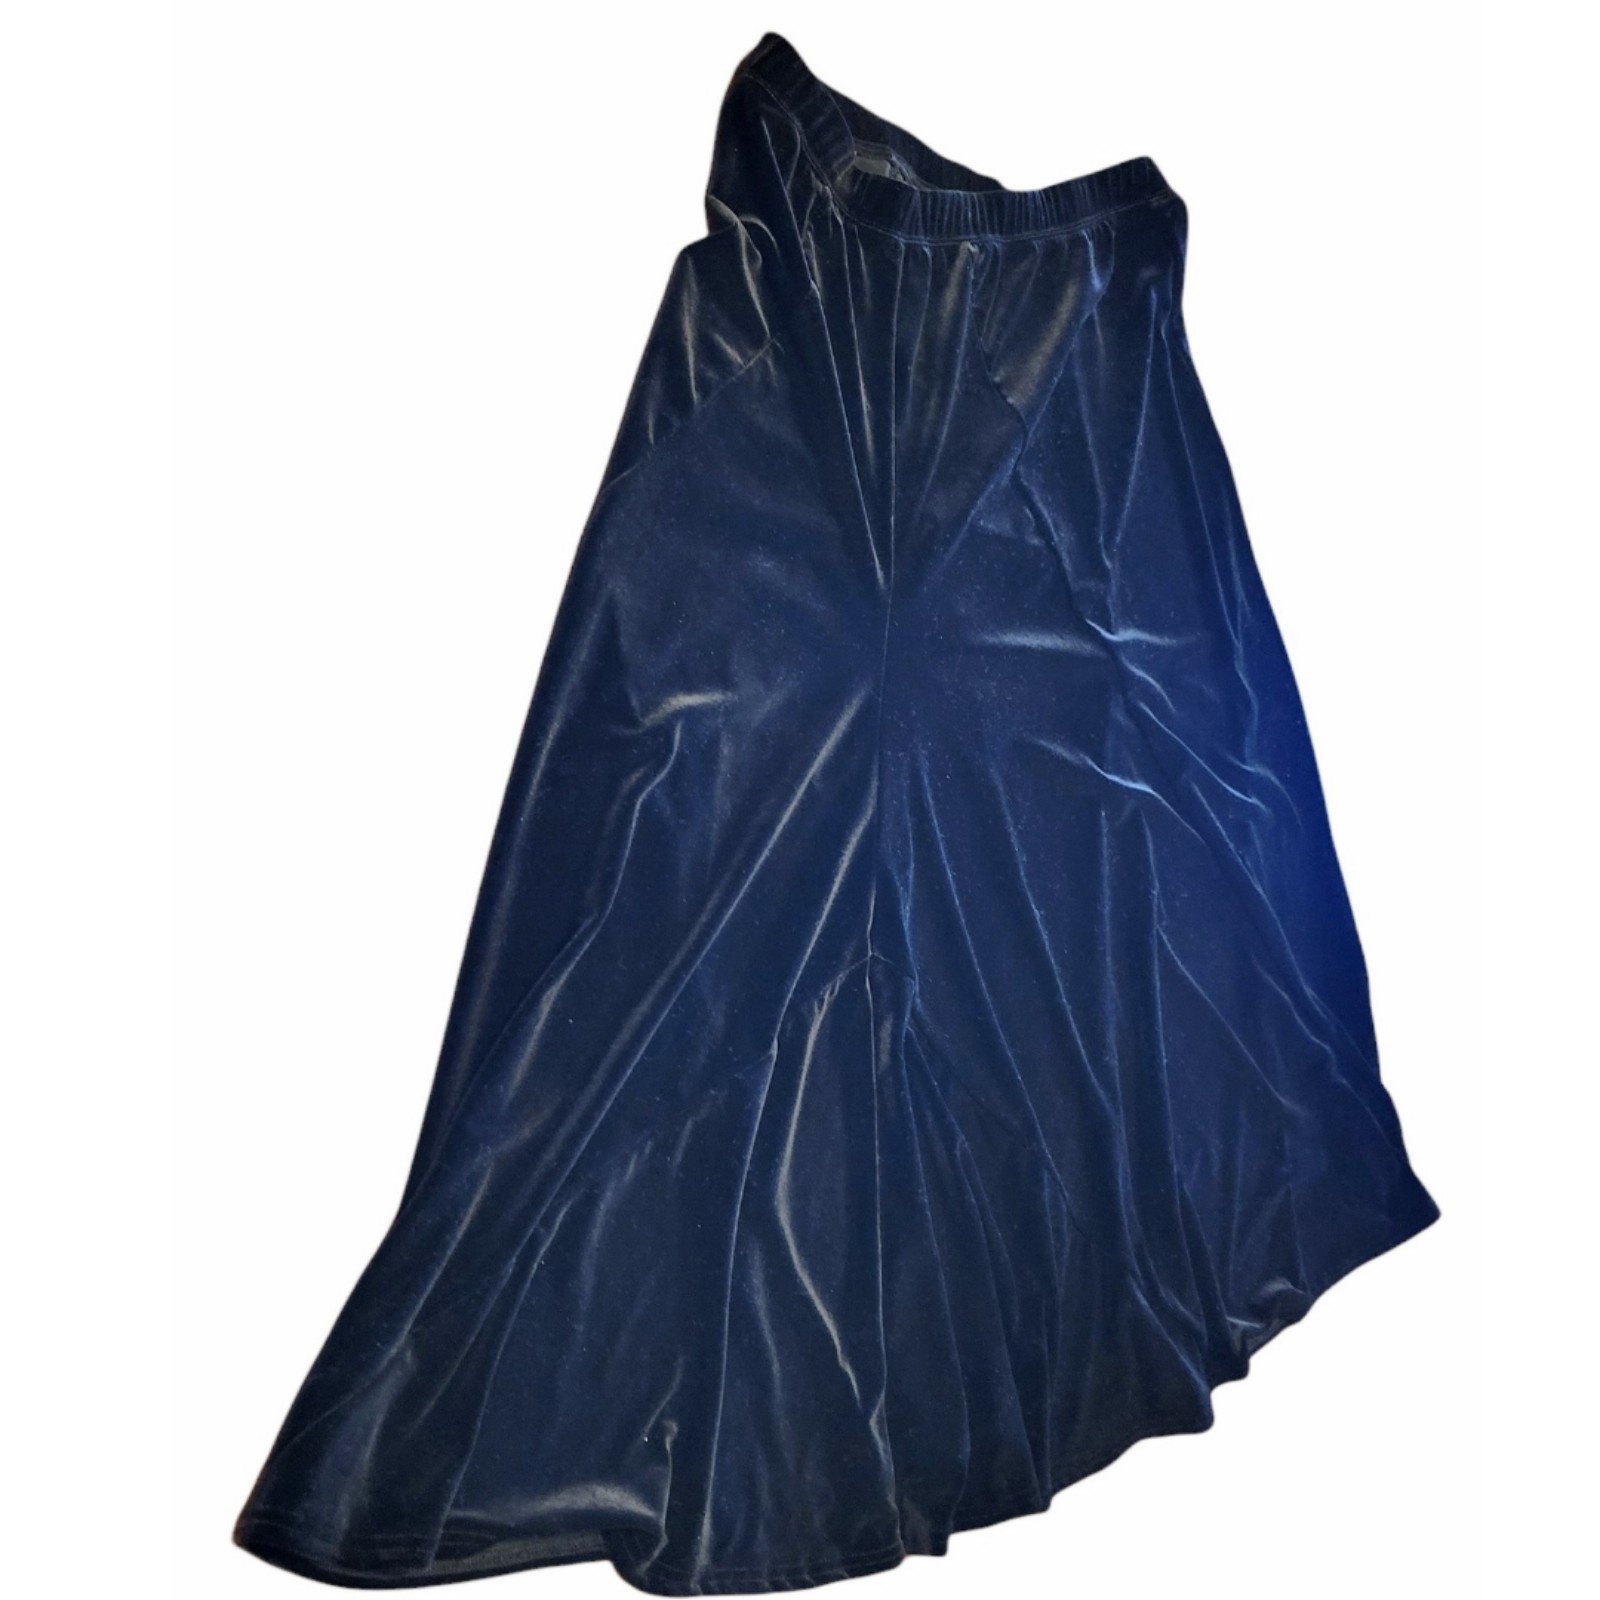 Black EUC Coldwater Creek Long Skirt Petite Large 6S79Q